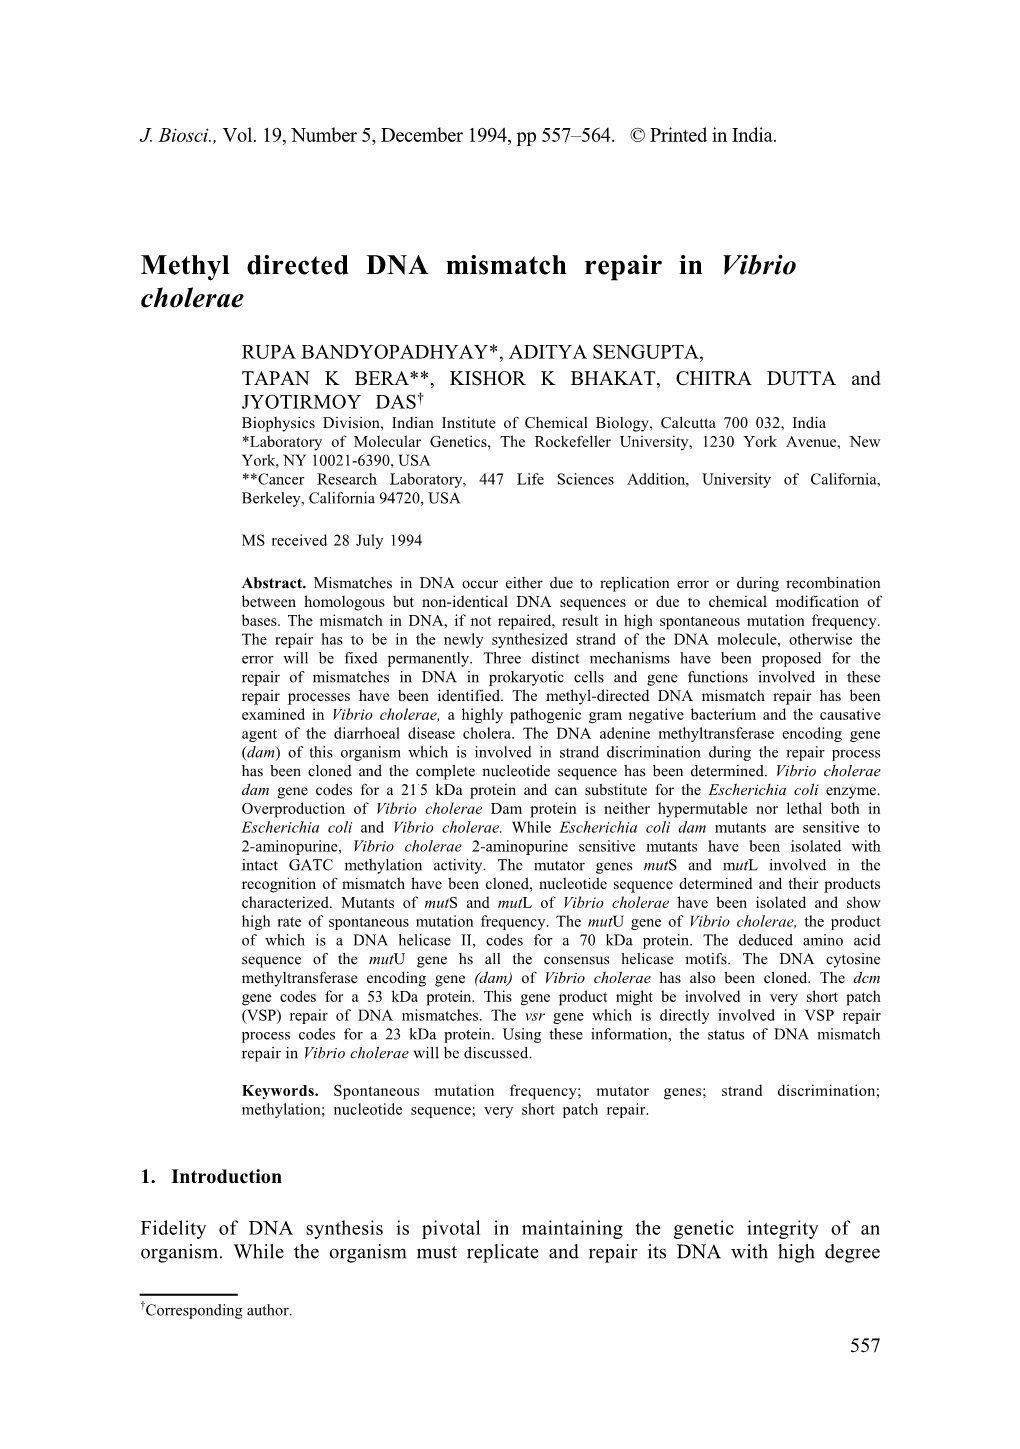 Methyl Directed DNA Mismatch Repair in Vibrio Cholerae